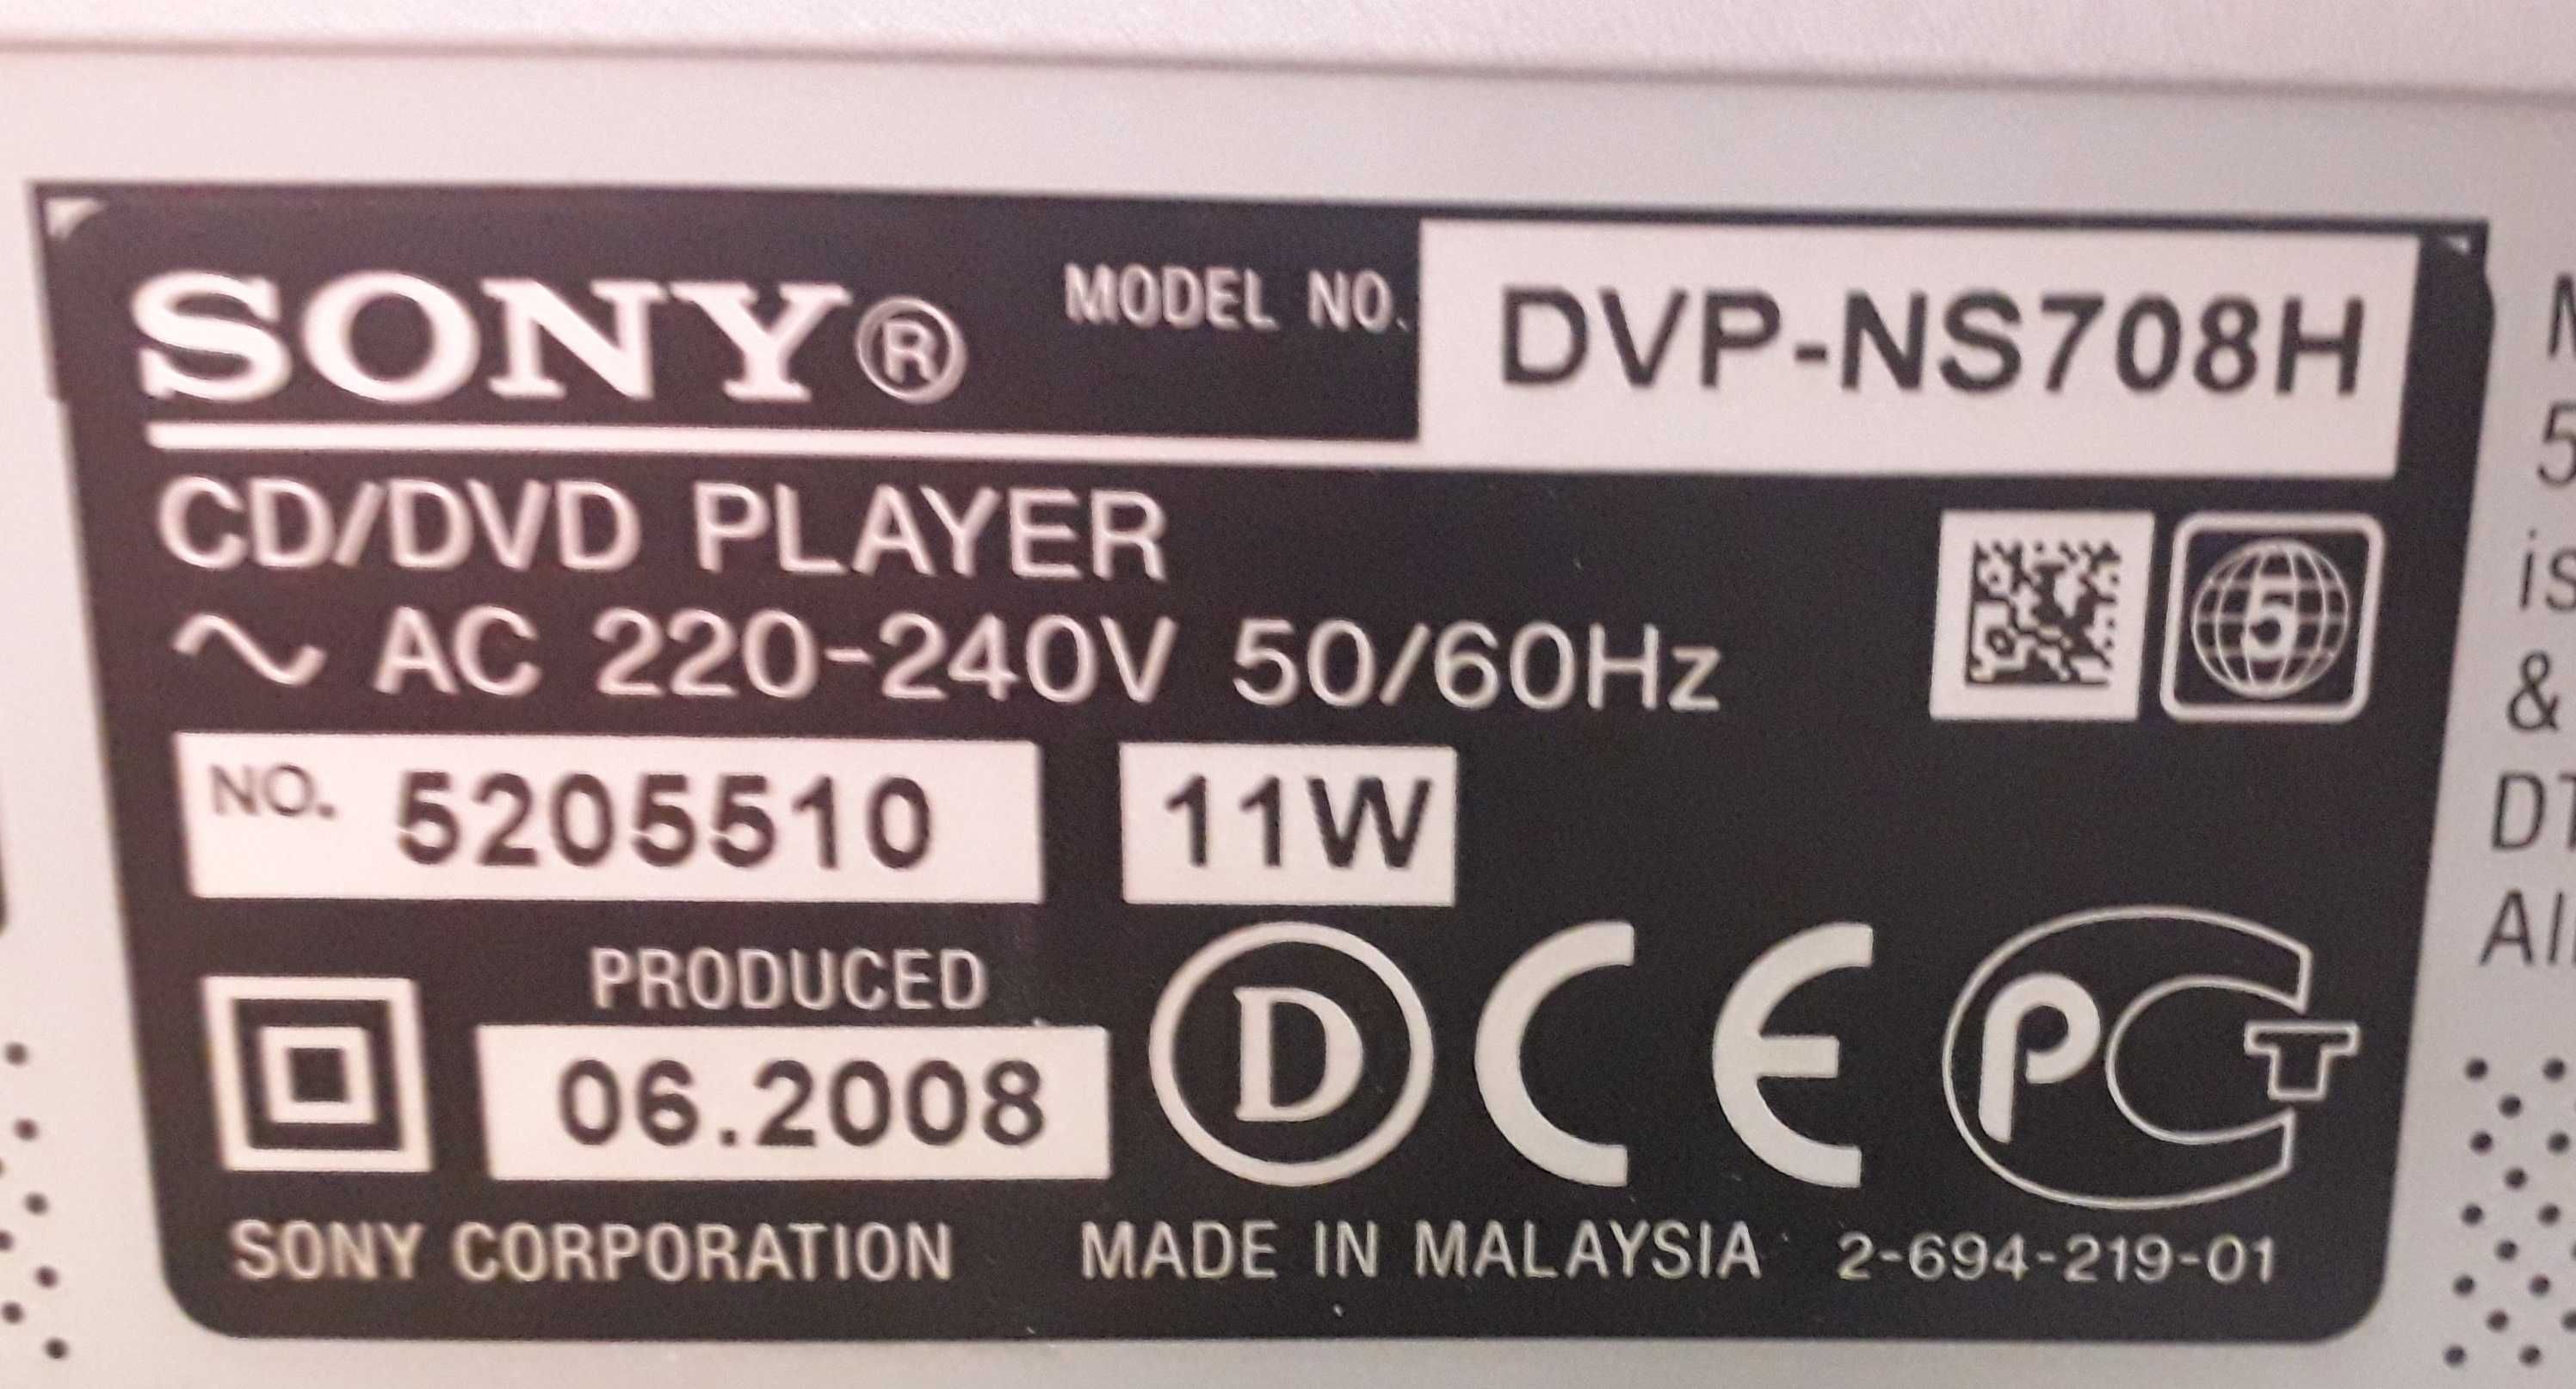 DVD Sony DVP-NS 708H